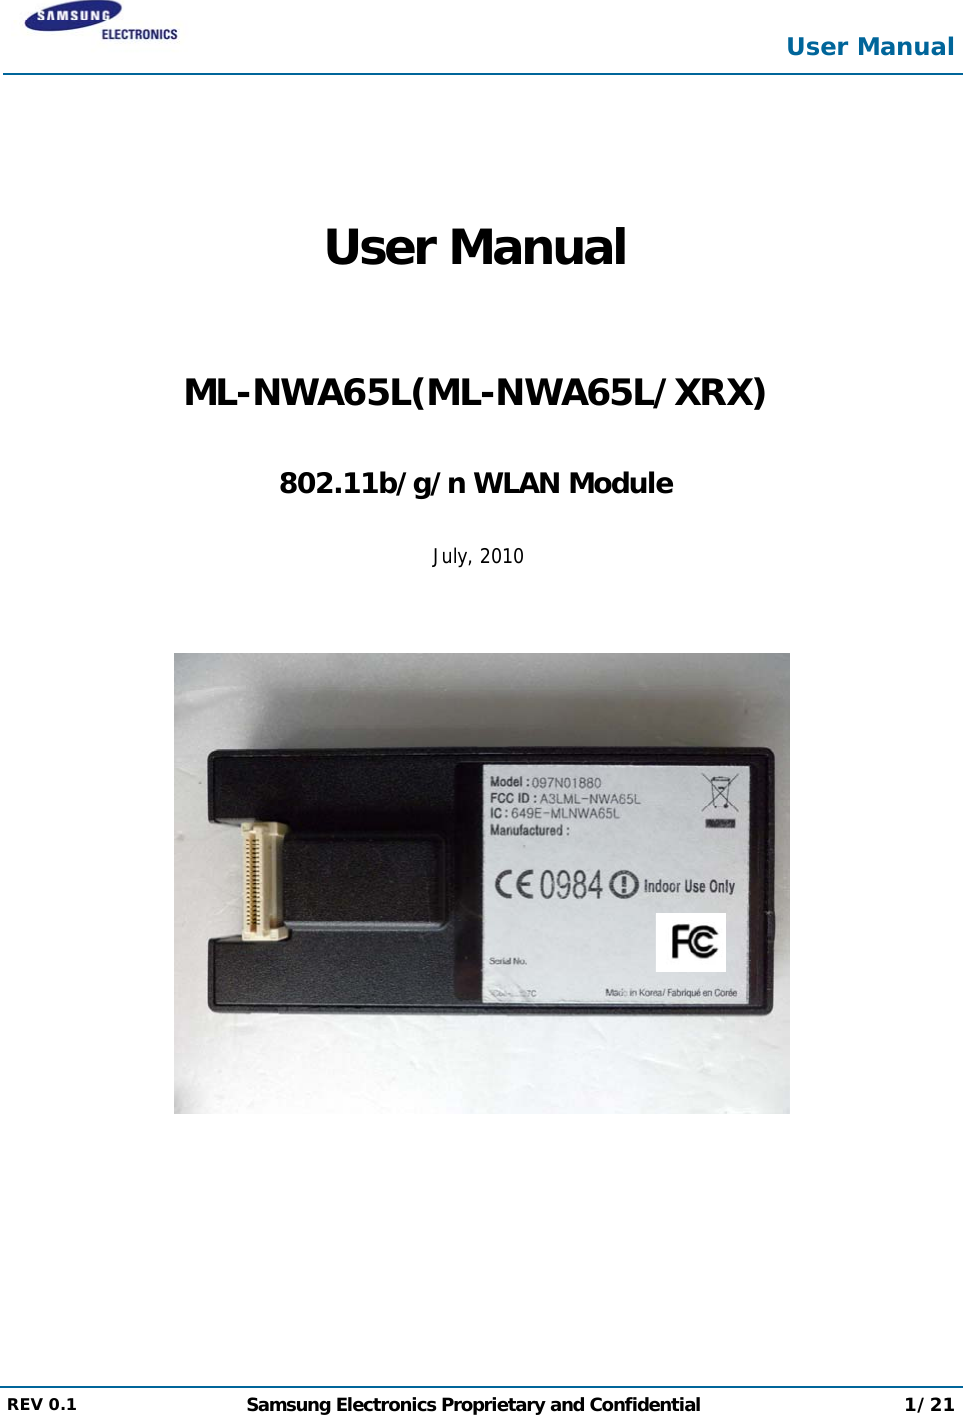  User Manual  REV 0.1  Samsung Electronics Proprietary and Confidential 1/21    User Manual  ML-NWA65L(ML-NWA65L/XRX)  802.11b/g/n WLAN Module   July, 2010    